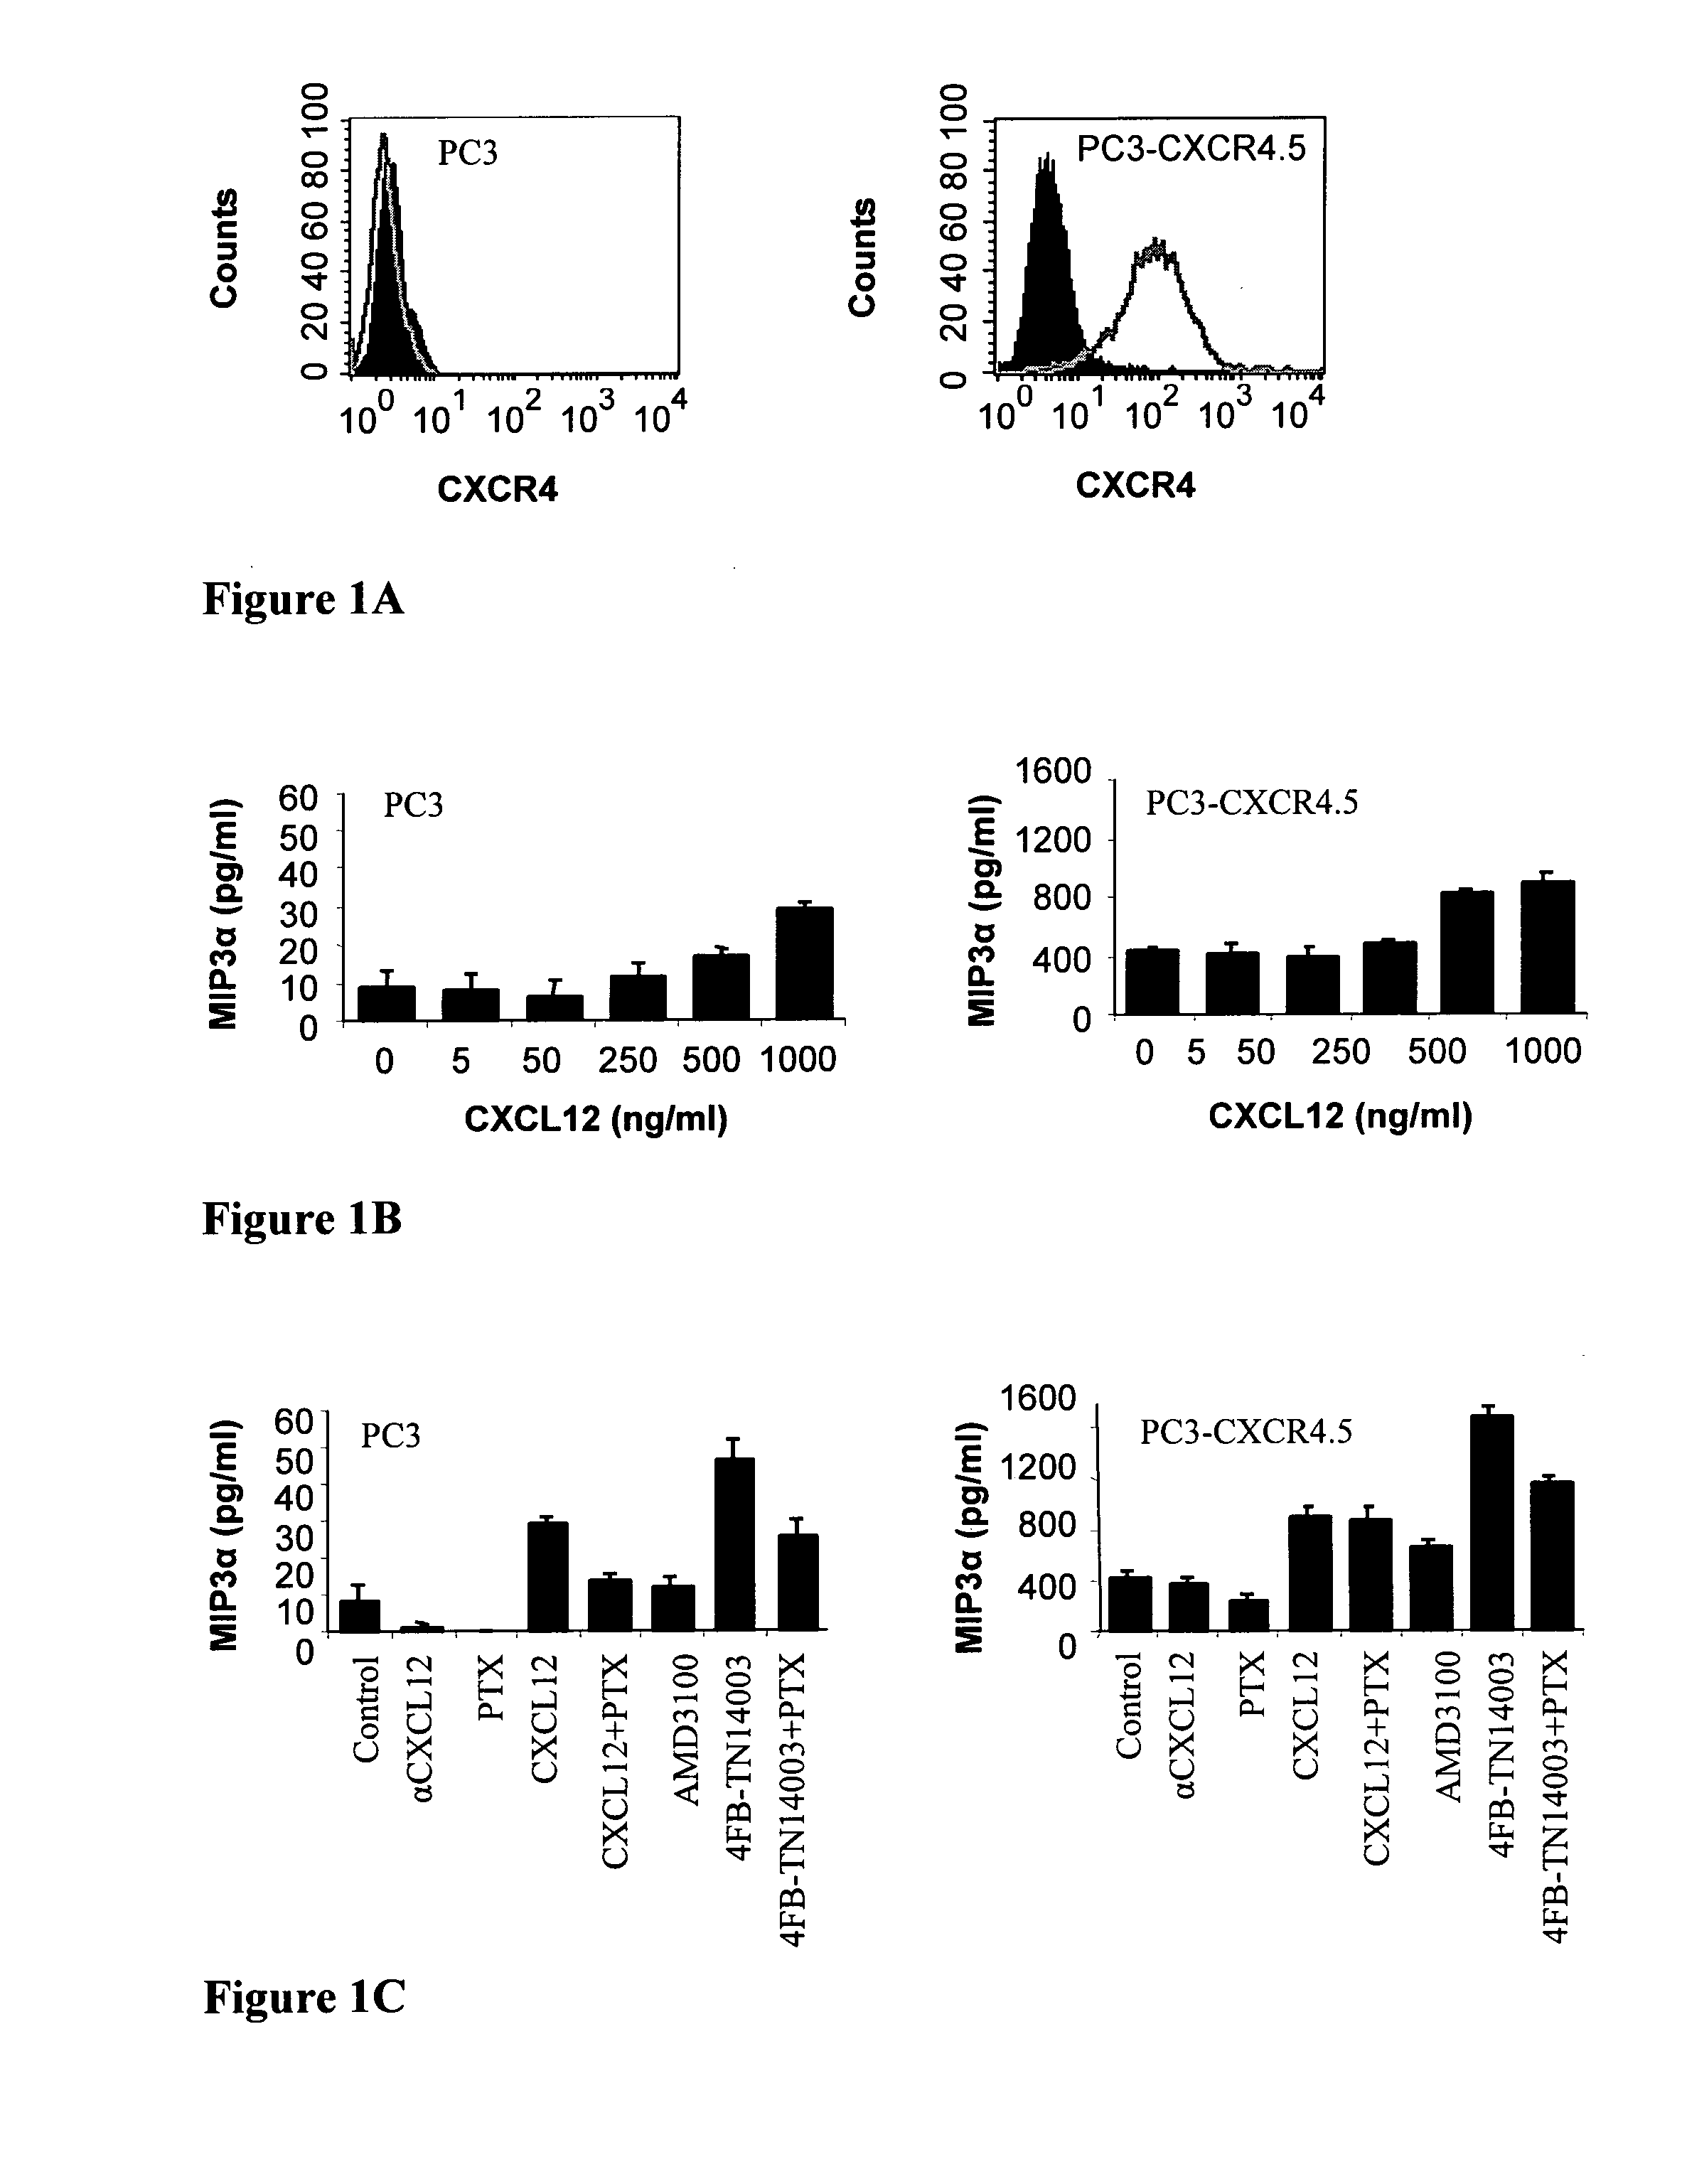 T-140 peptide analogs having cxcr4 super-agonist activity for immunomodulation